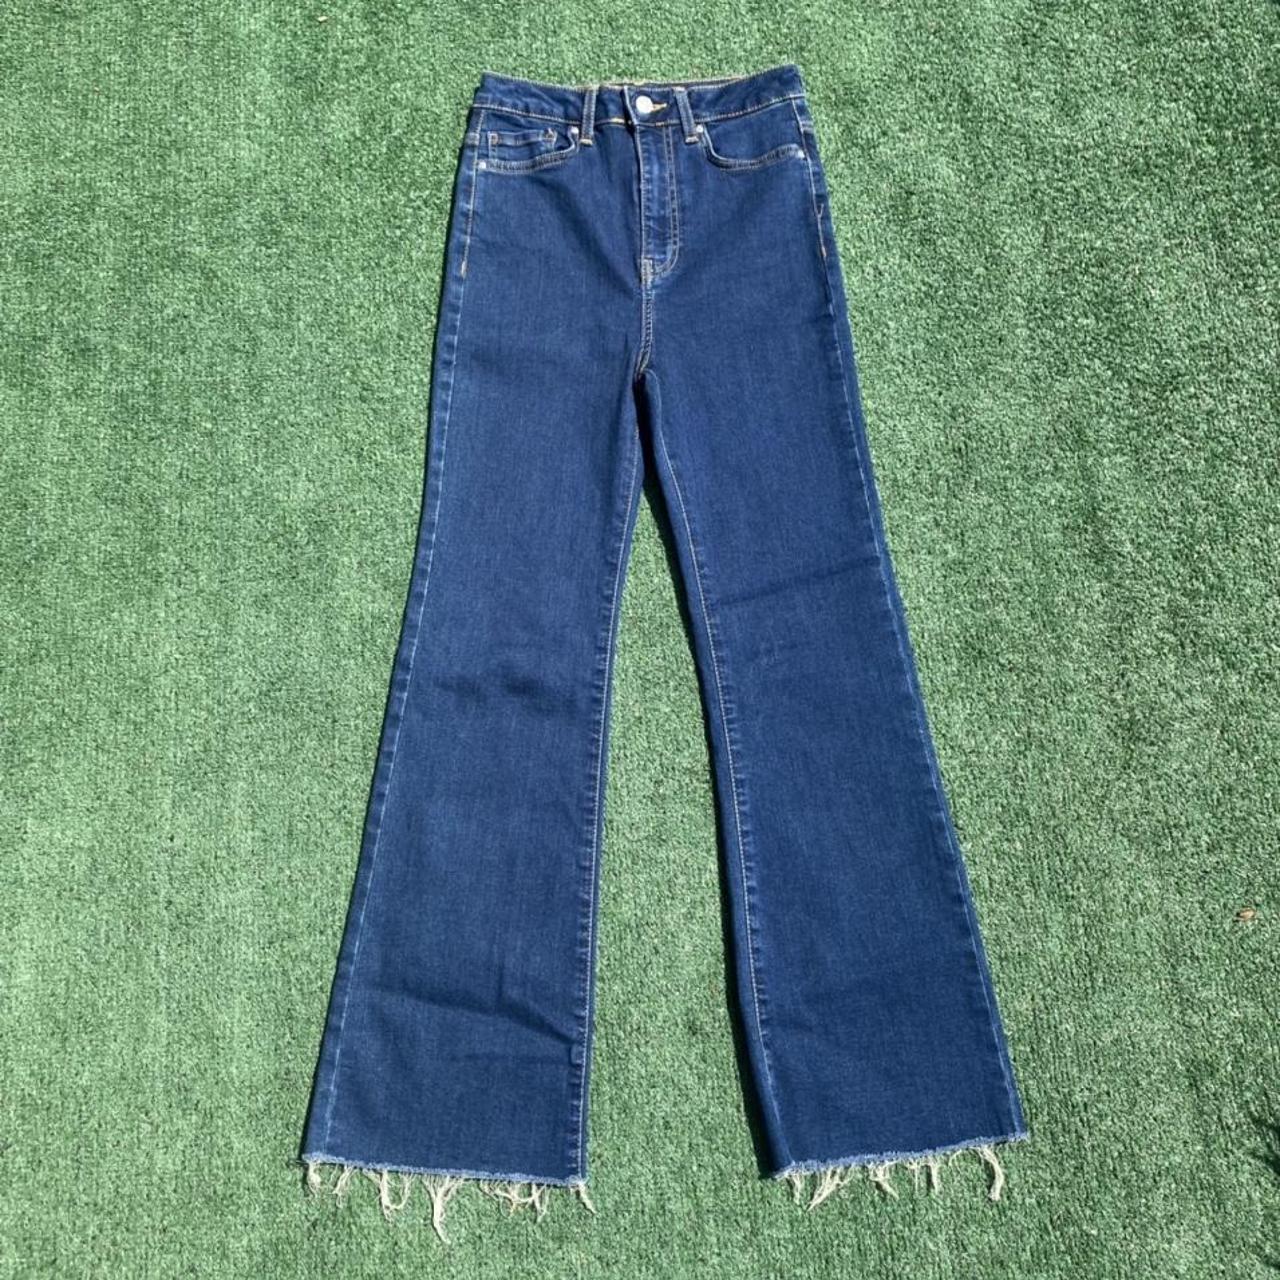 Denim flare jeans from forever 21 size 24 🦋 🤍 Never... - Depop